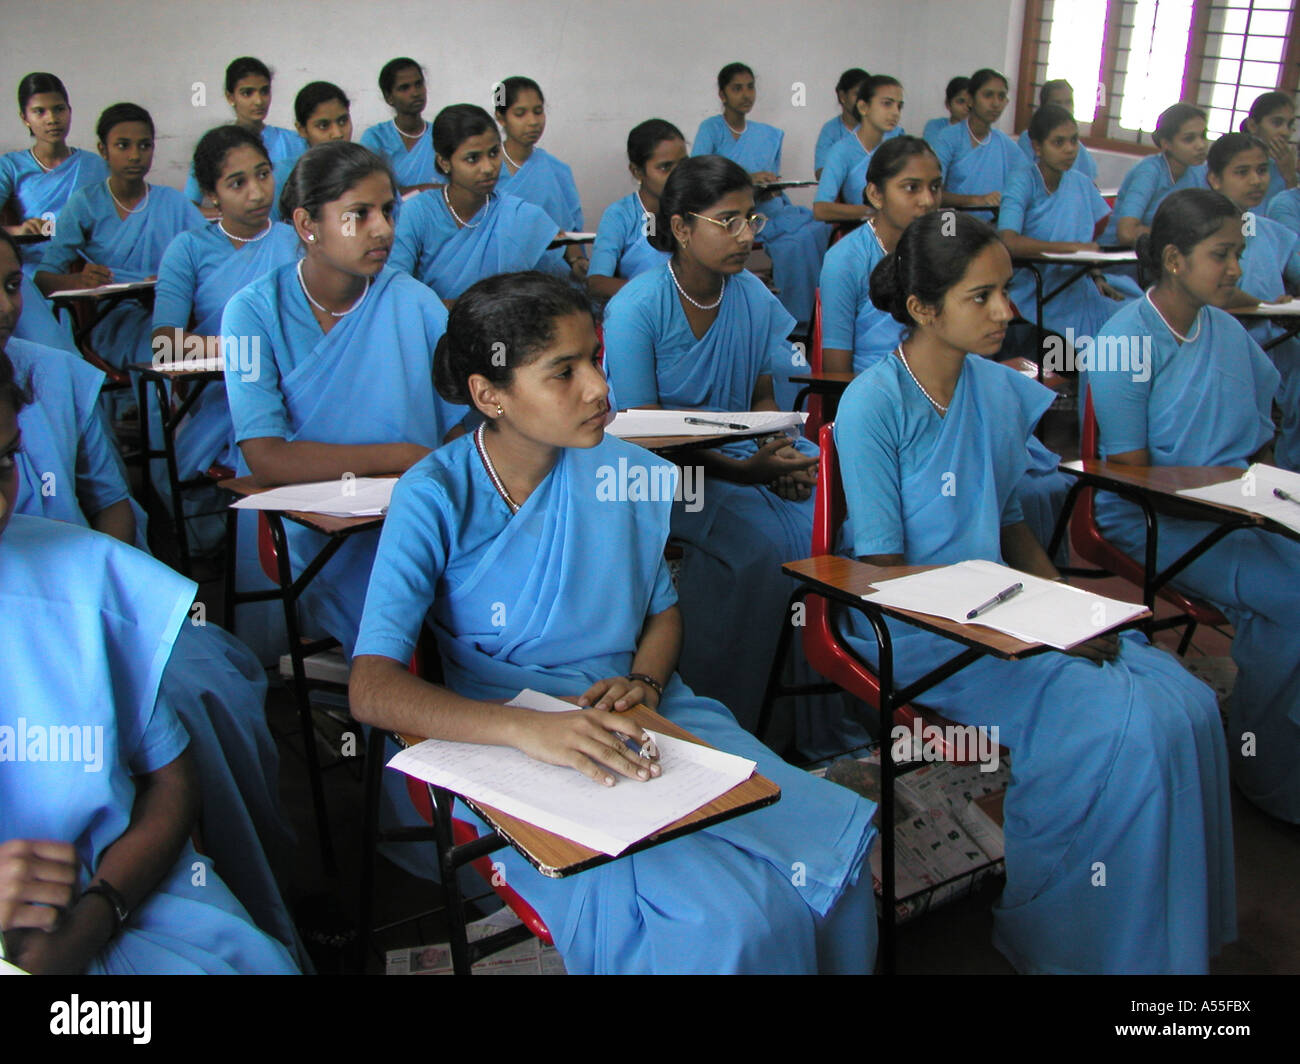 Painet ik0542 Indien Krankenpflege Studenten Mädchen in blau Togen Klasse Schule Muttuchira Kerala Land Entwicklungsland Stockfoto